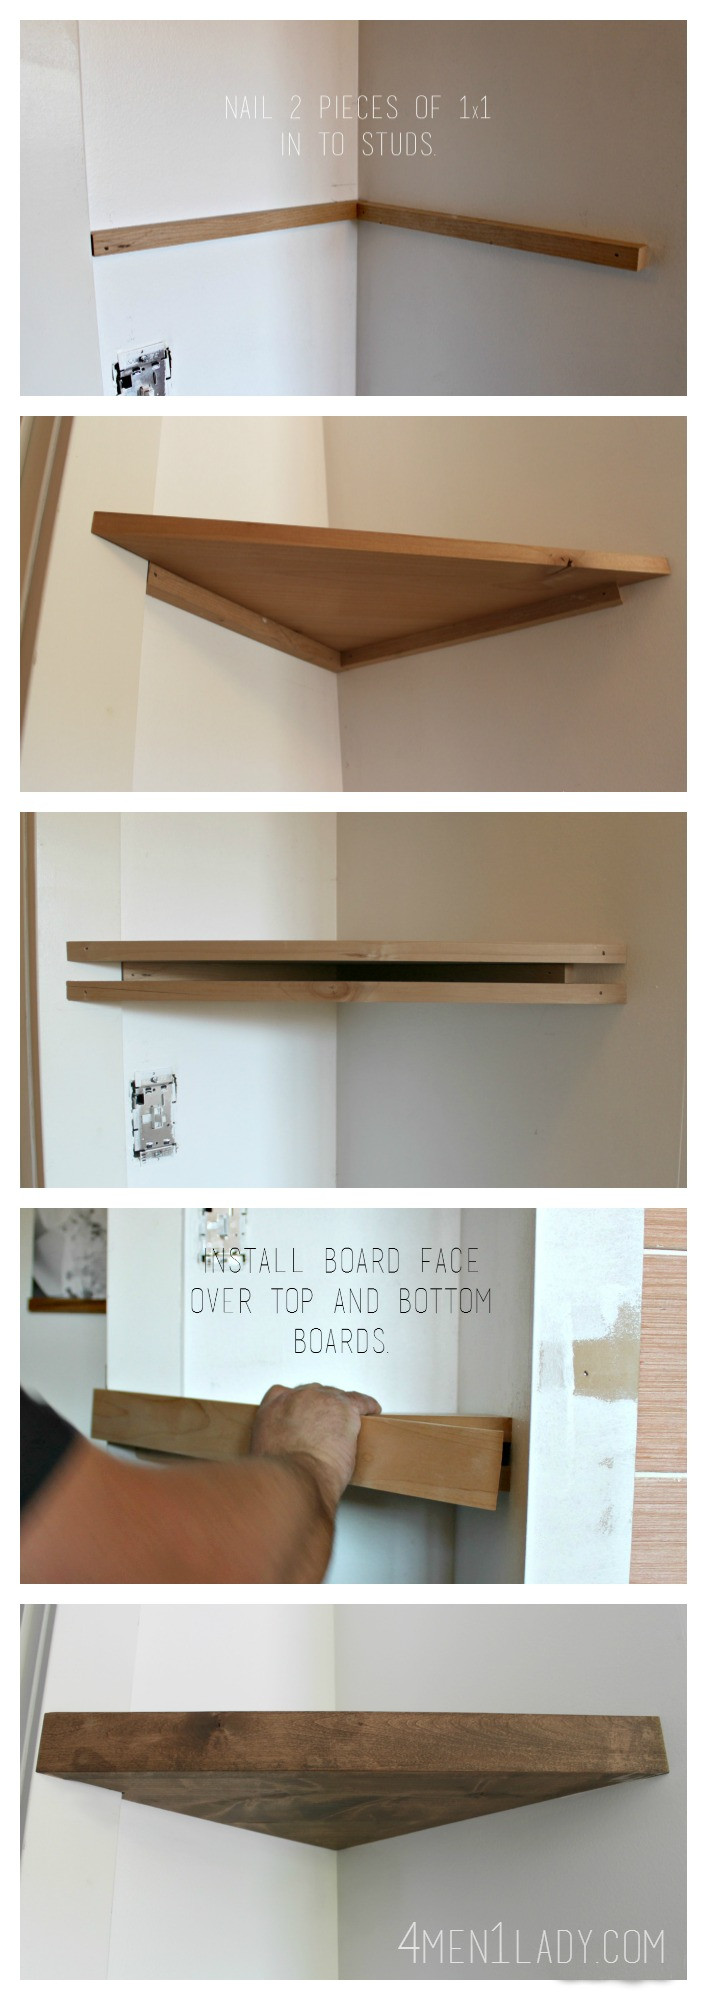 Best ideas about DIY Corner Shelf Plans
. Save or Pin When Life Gives You Lemons…Make Corner Floating Shelves Now.